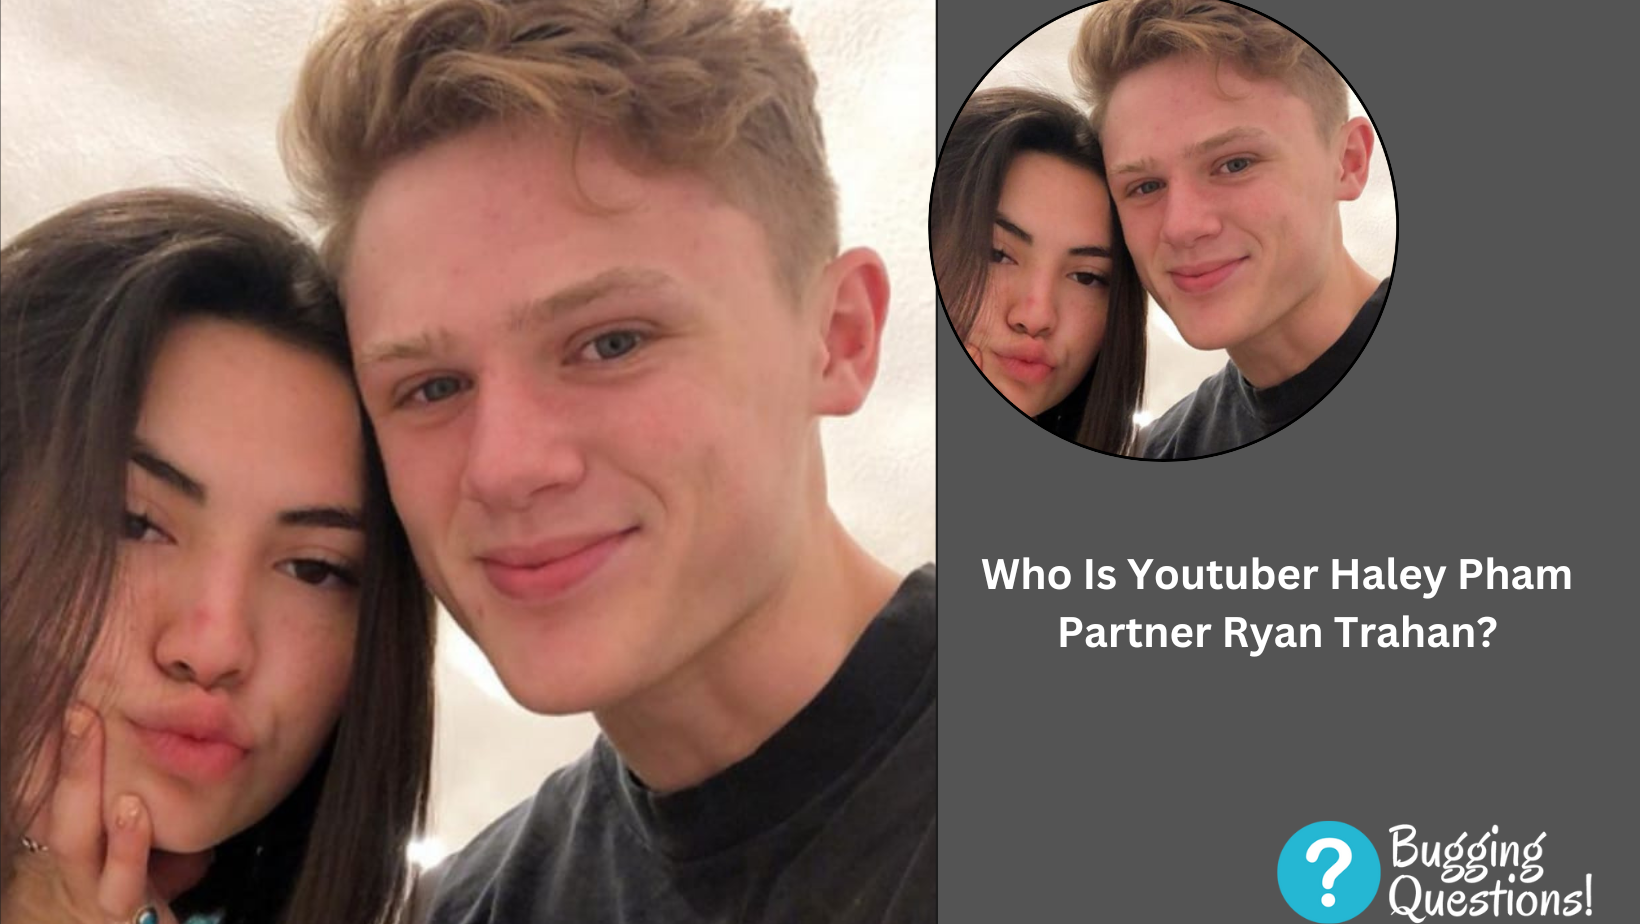 Who Is Youtuber Haley Pham Partner Ryan Trahan?